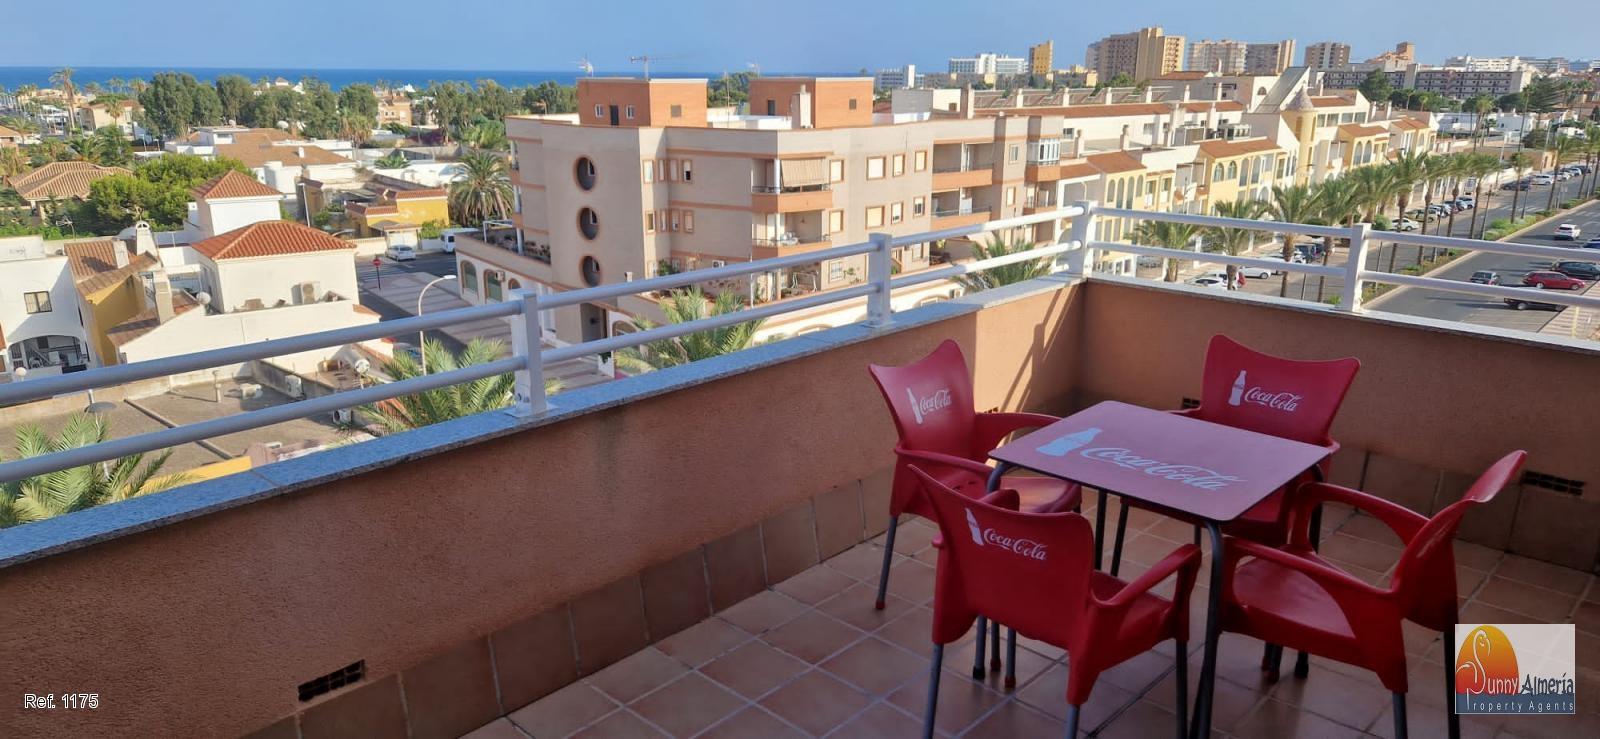 Apartment for rent in Avenida  Sabinal 1 (Roquetas de Mar), 650 €/month